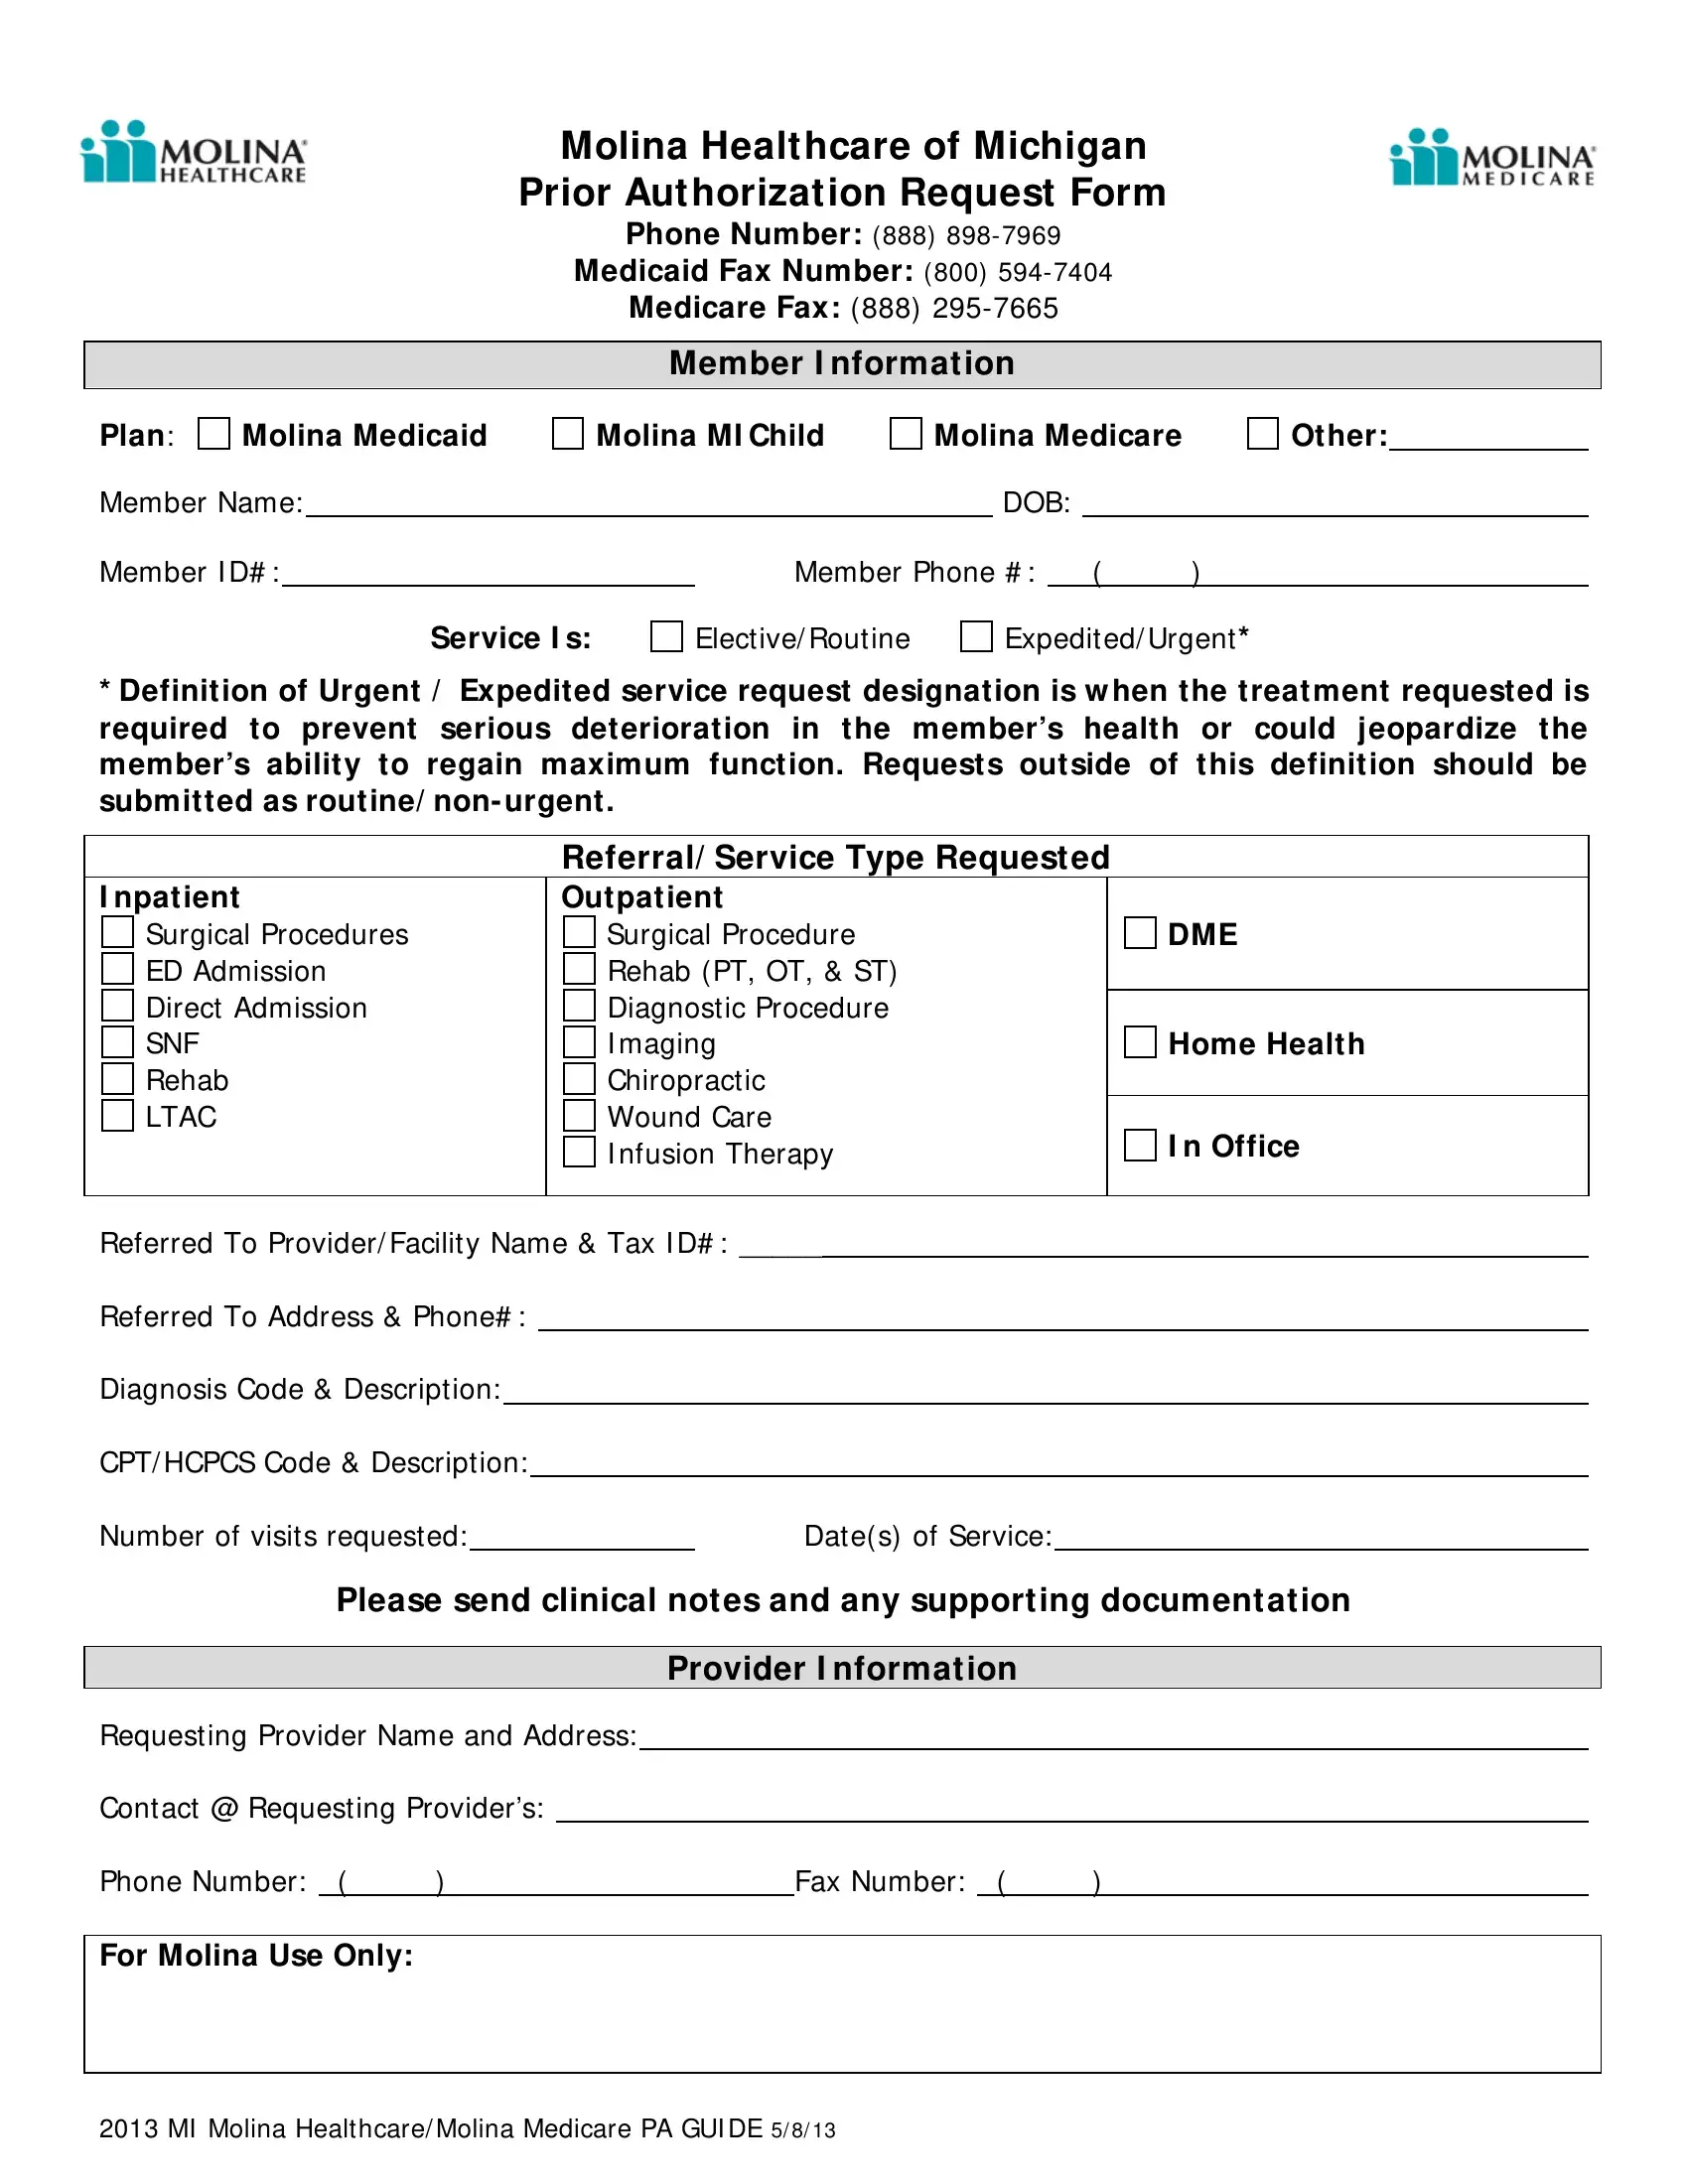 Michigan Molina Prior Authorization PDF Form FormsPal